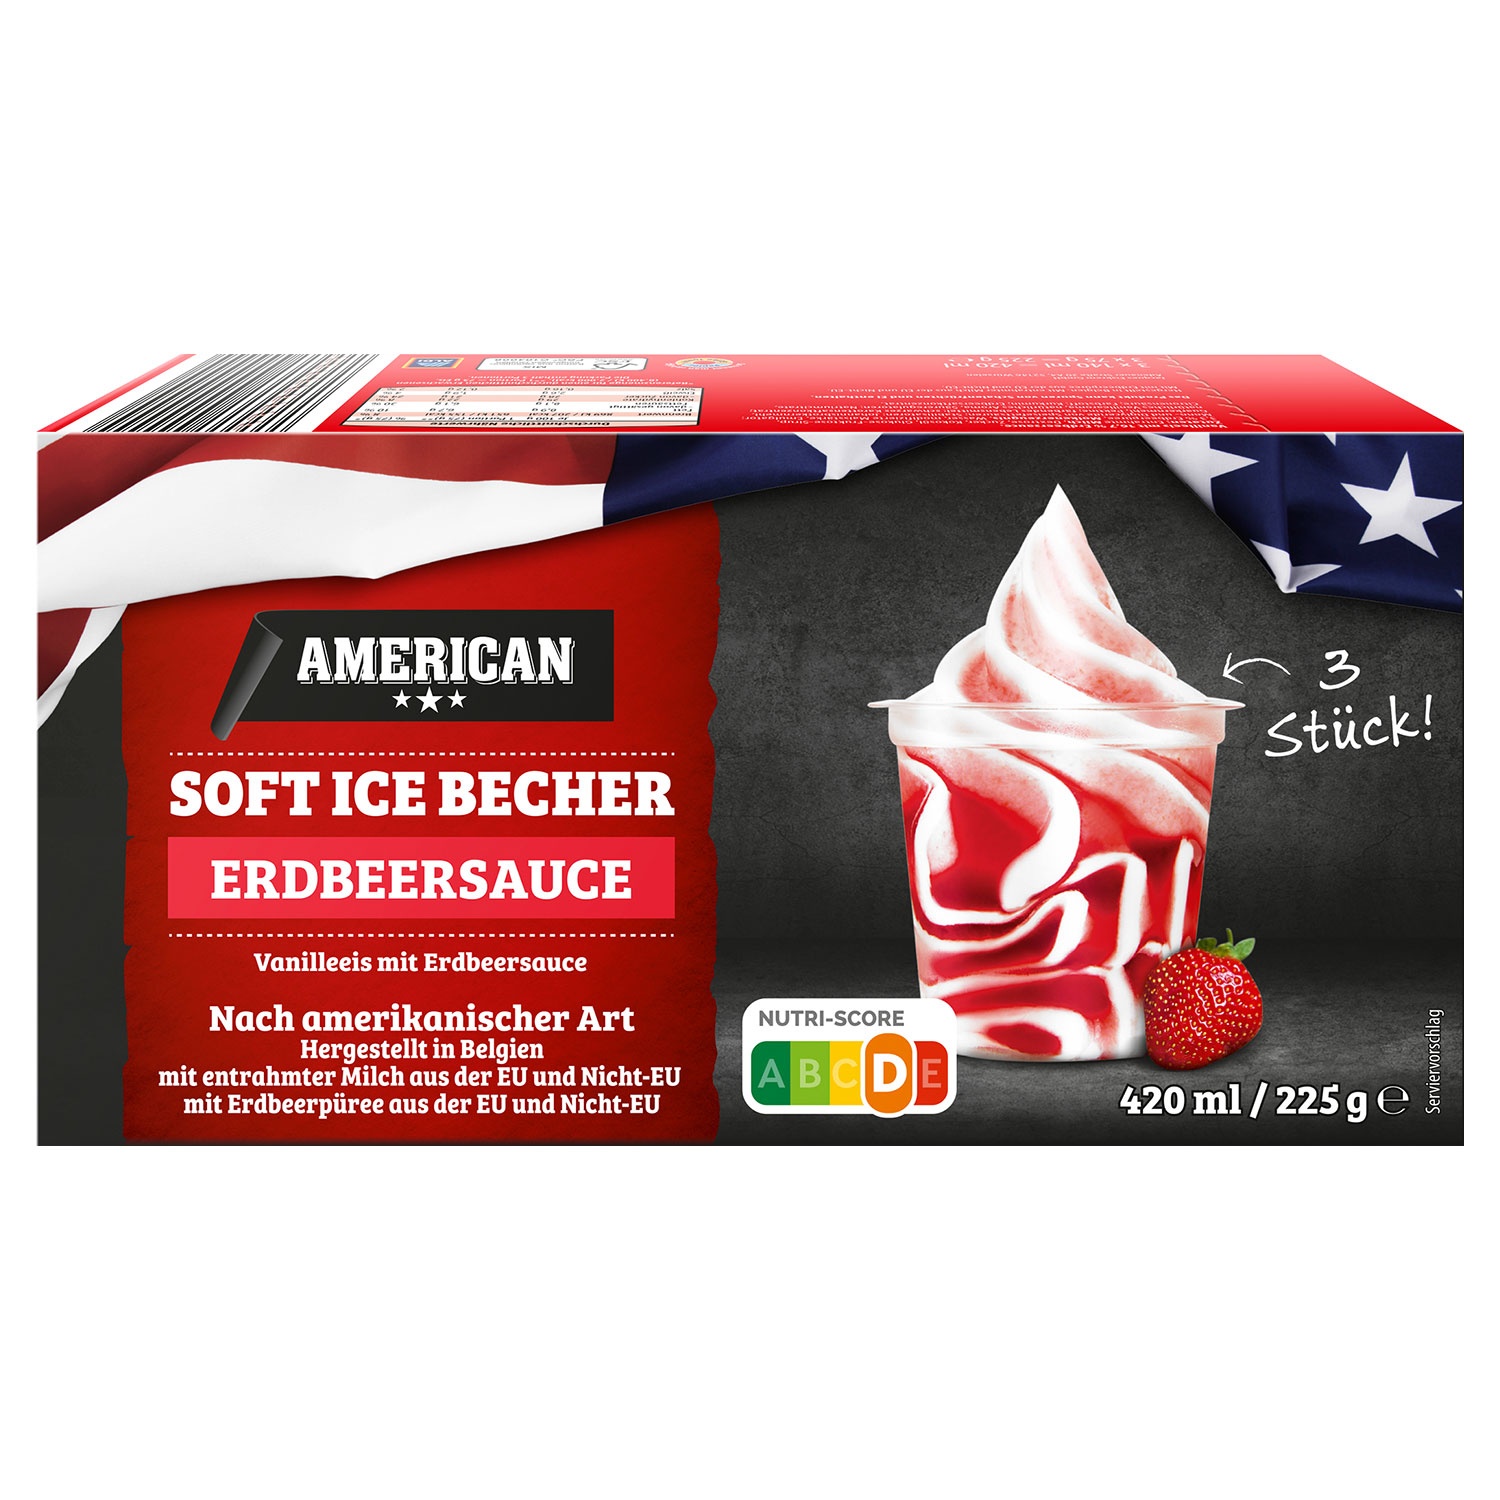 AMERICAN Soft Ice Becher 420 ml